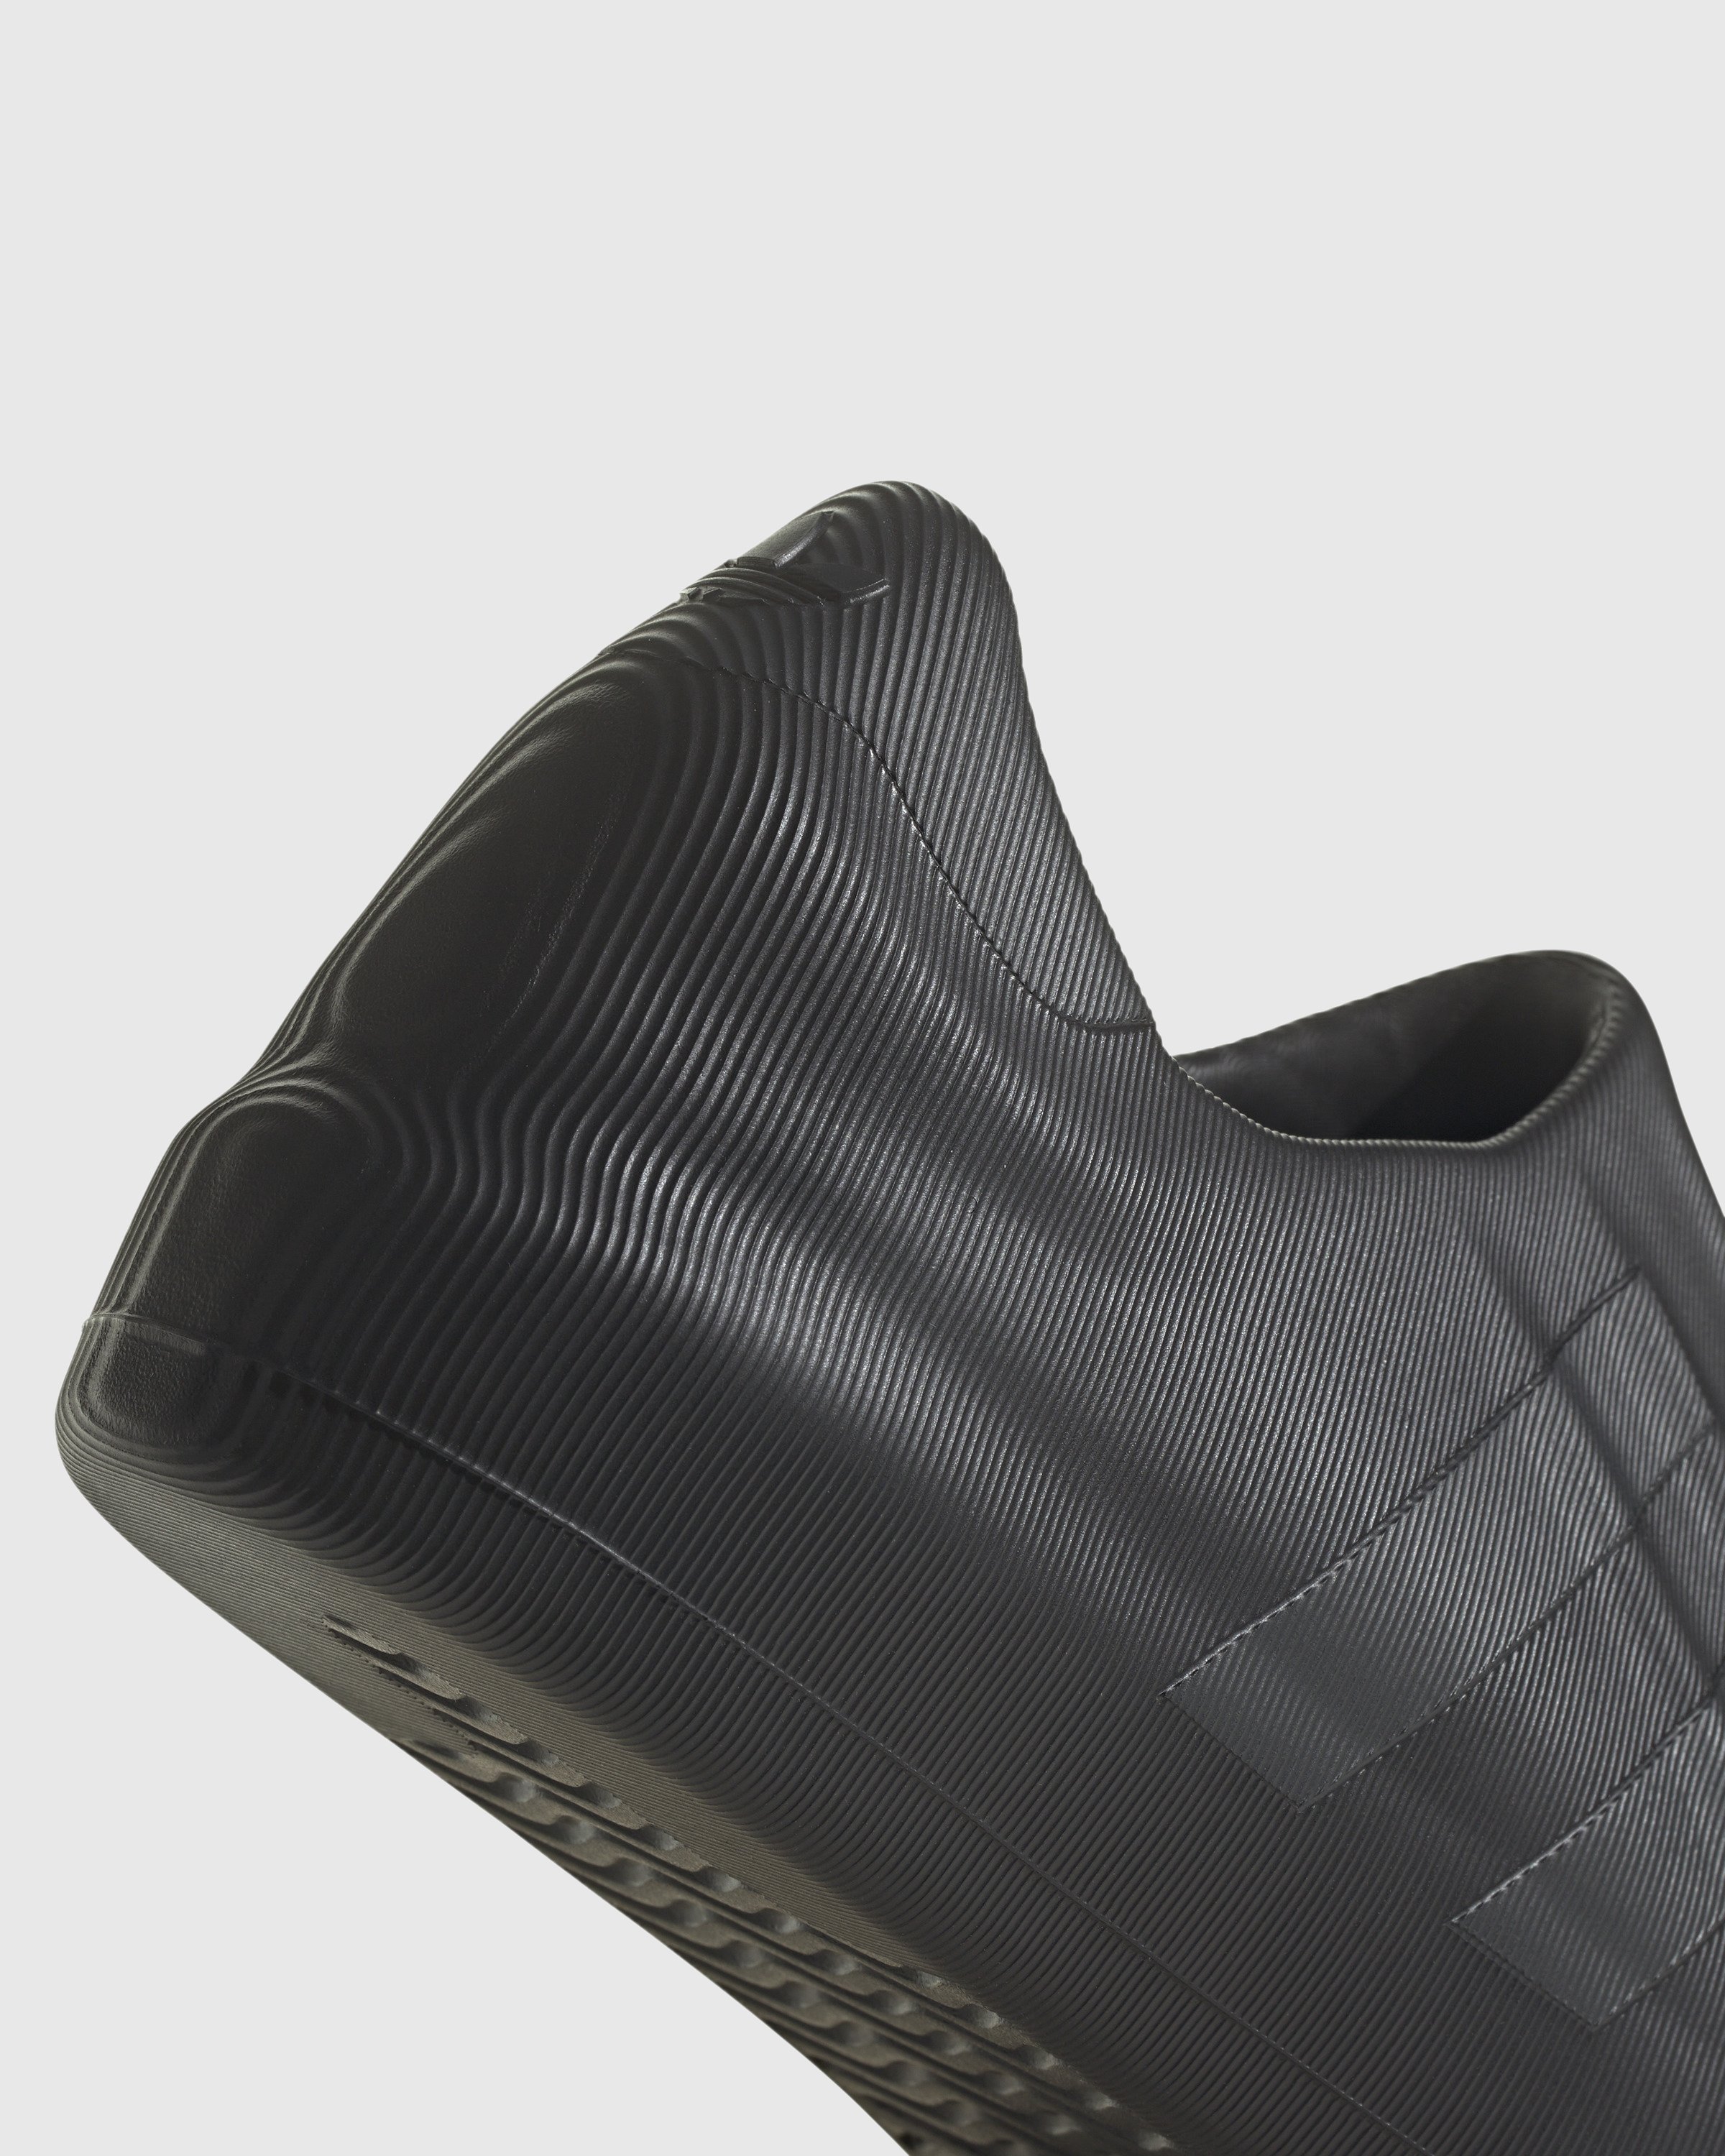 Adidas - Adifom Superstar Black Carbon - Footwear - Black - Image 4